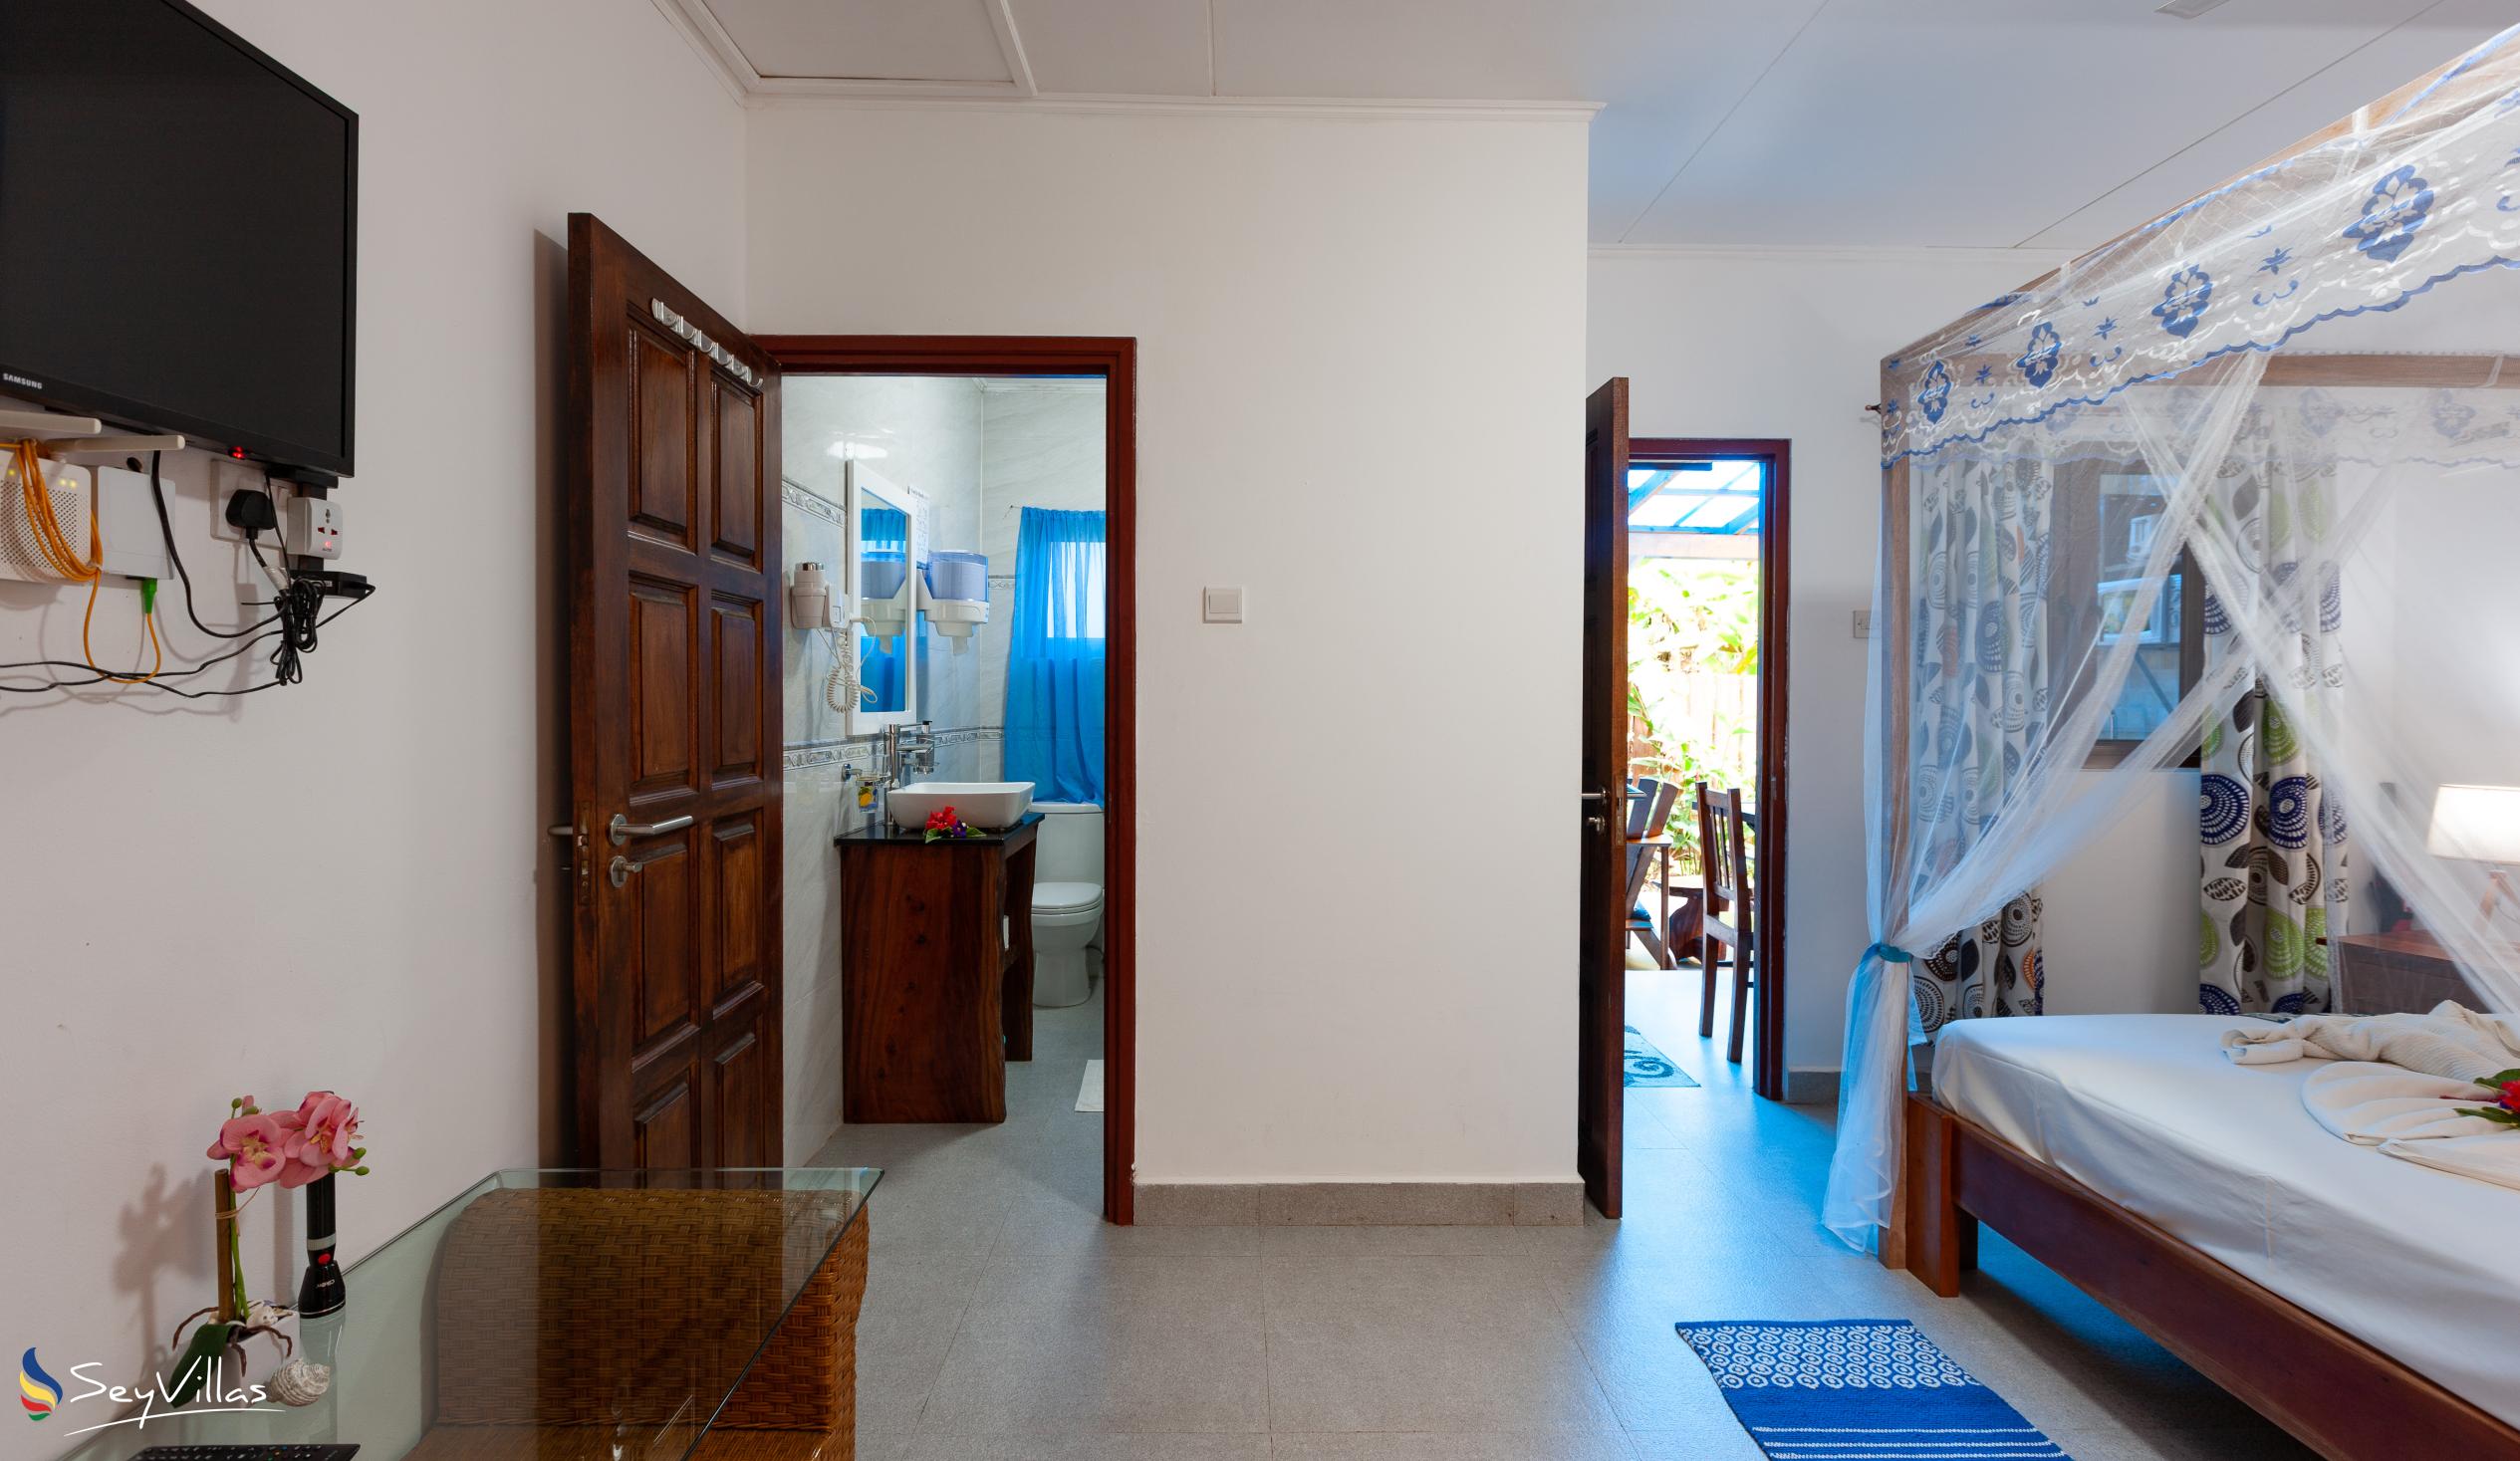 Photo 55: Buisson Guest House - Hibiscus Room - La Digue (Seychelles)